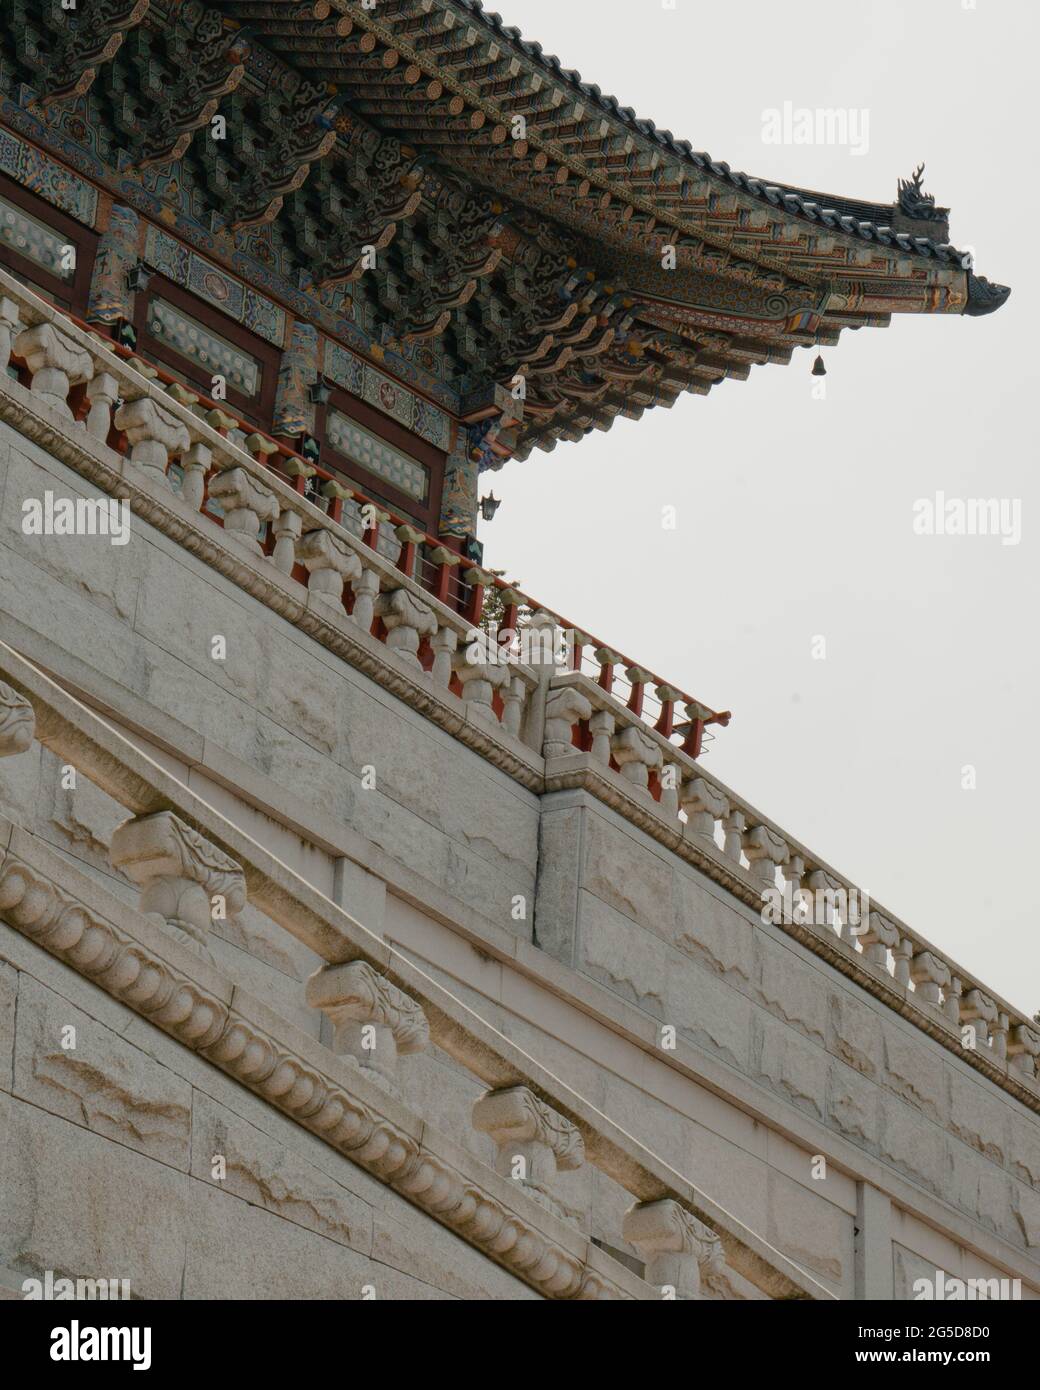 Great Palace of Korea wall view Stock Photo